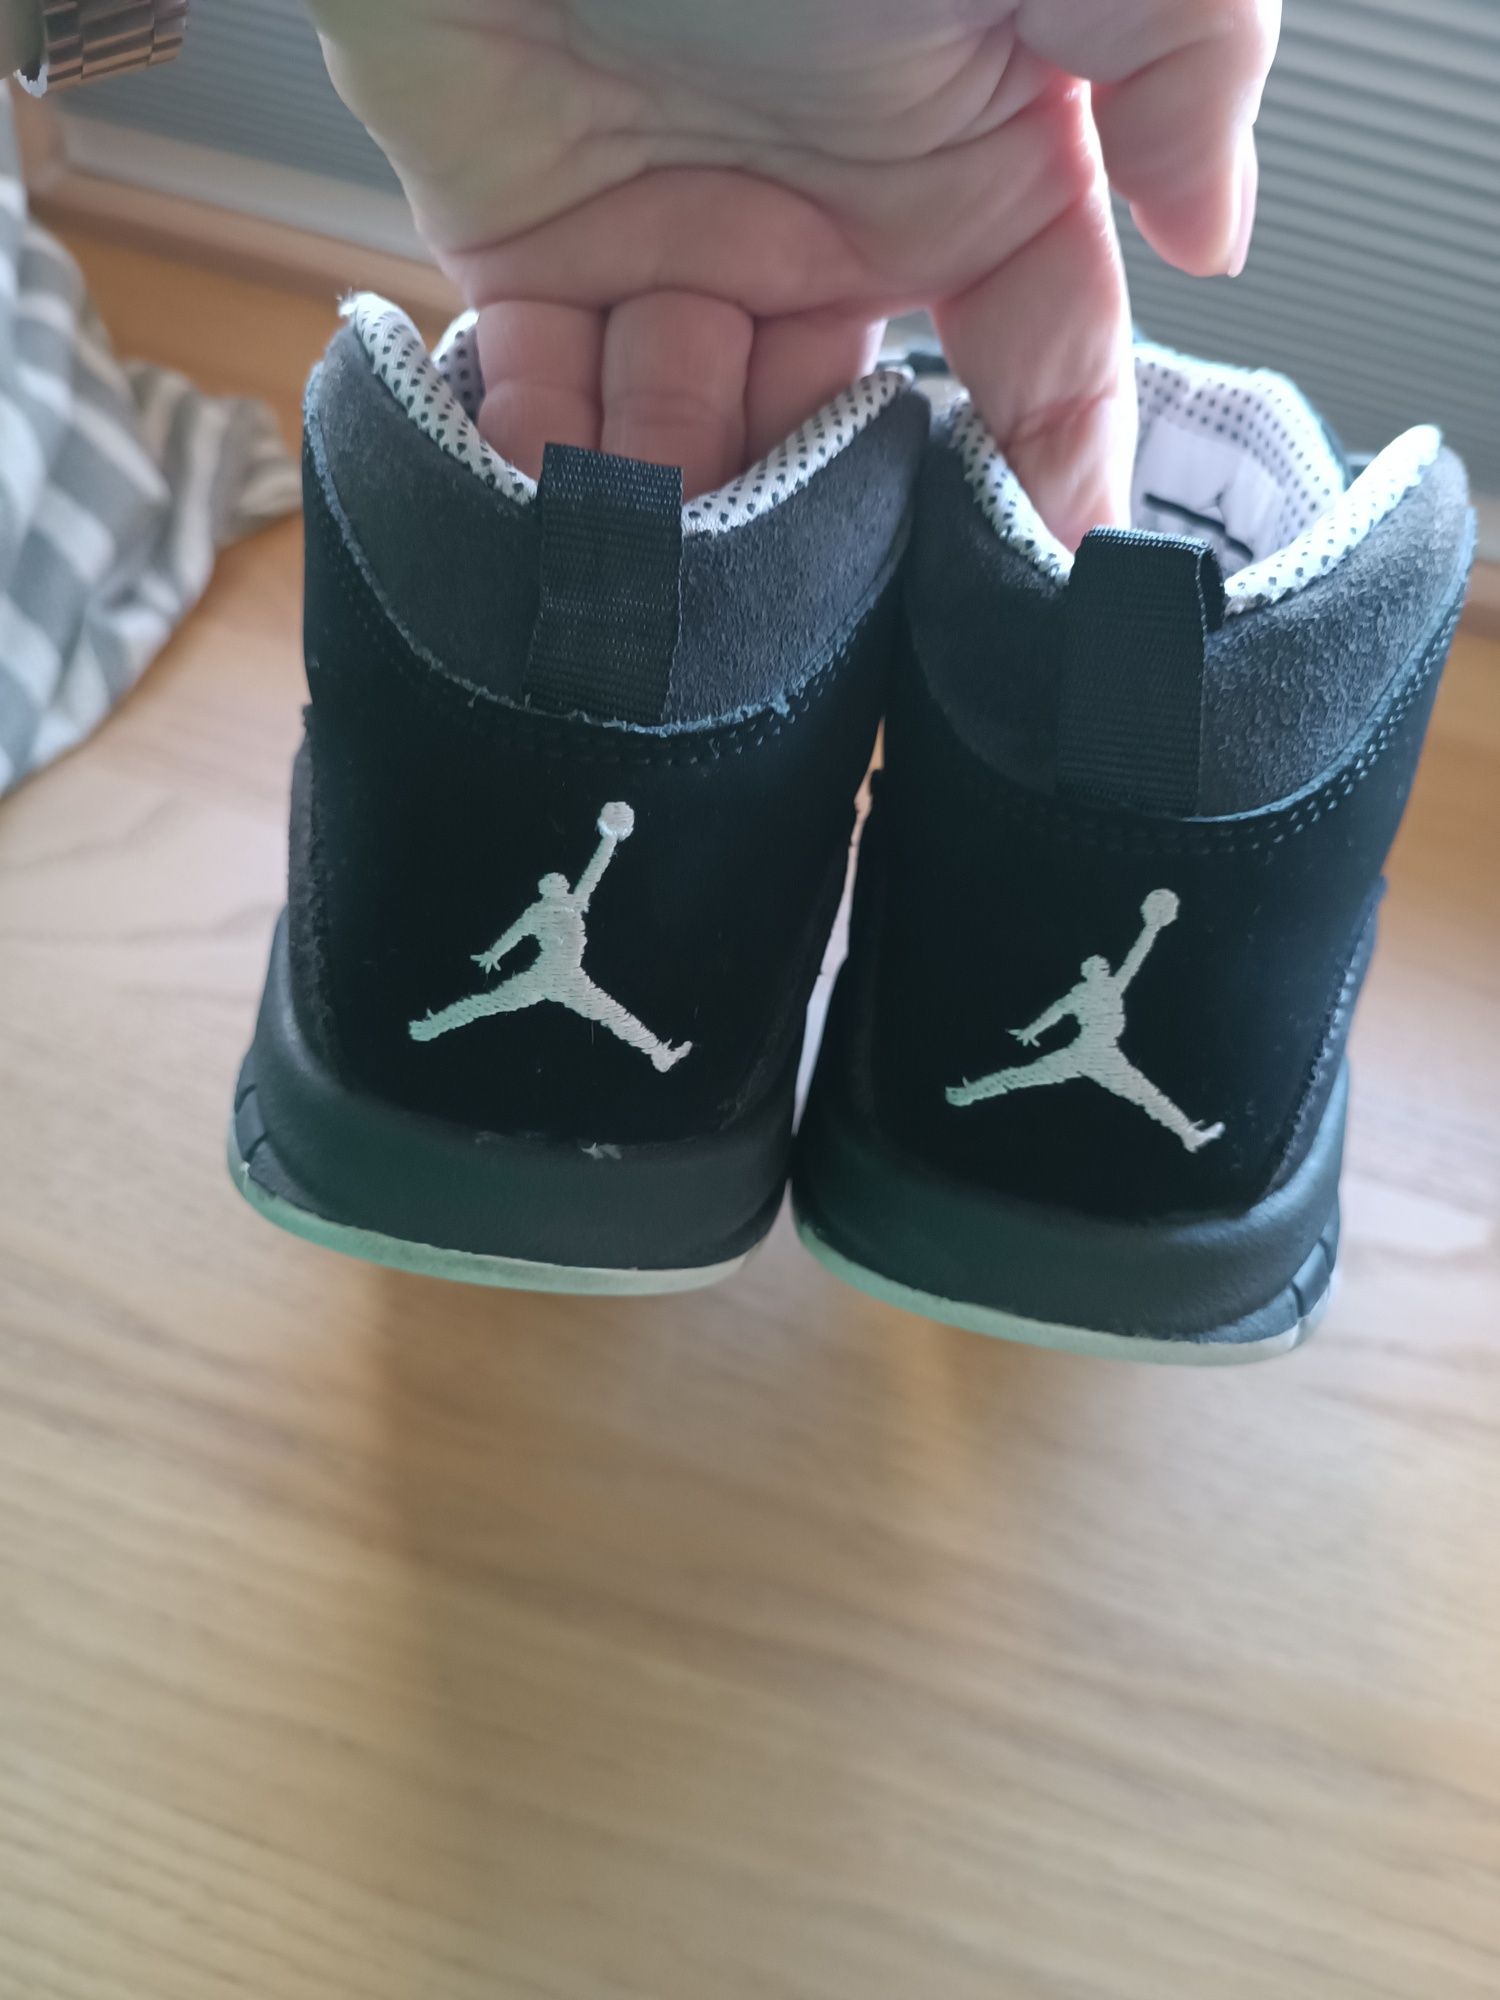 Adidasy/ trampki za kostkę Nike Jordan r. 33